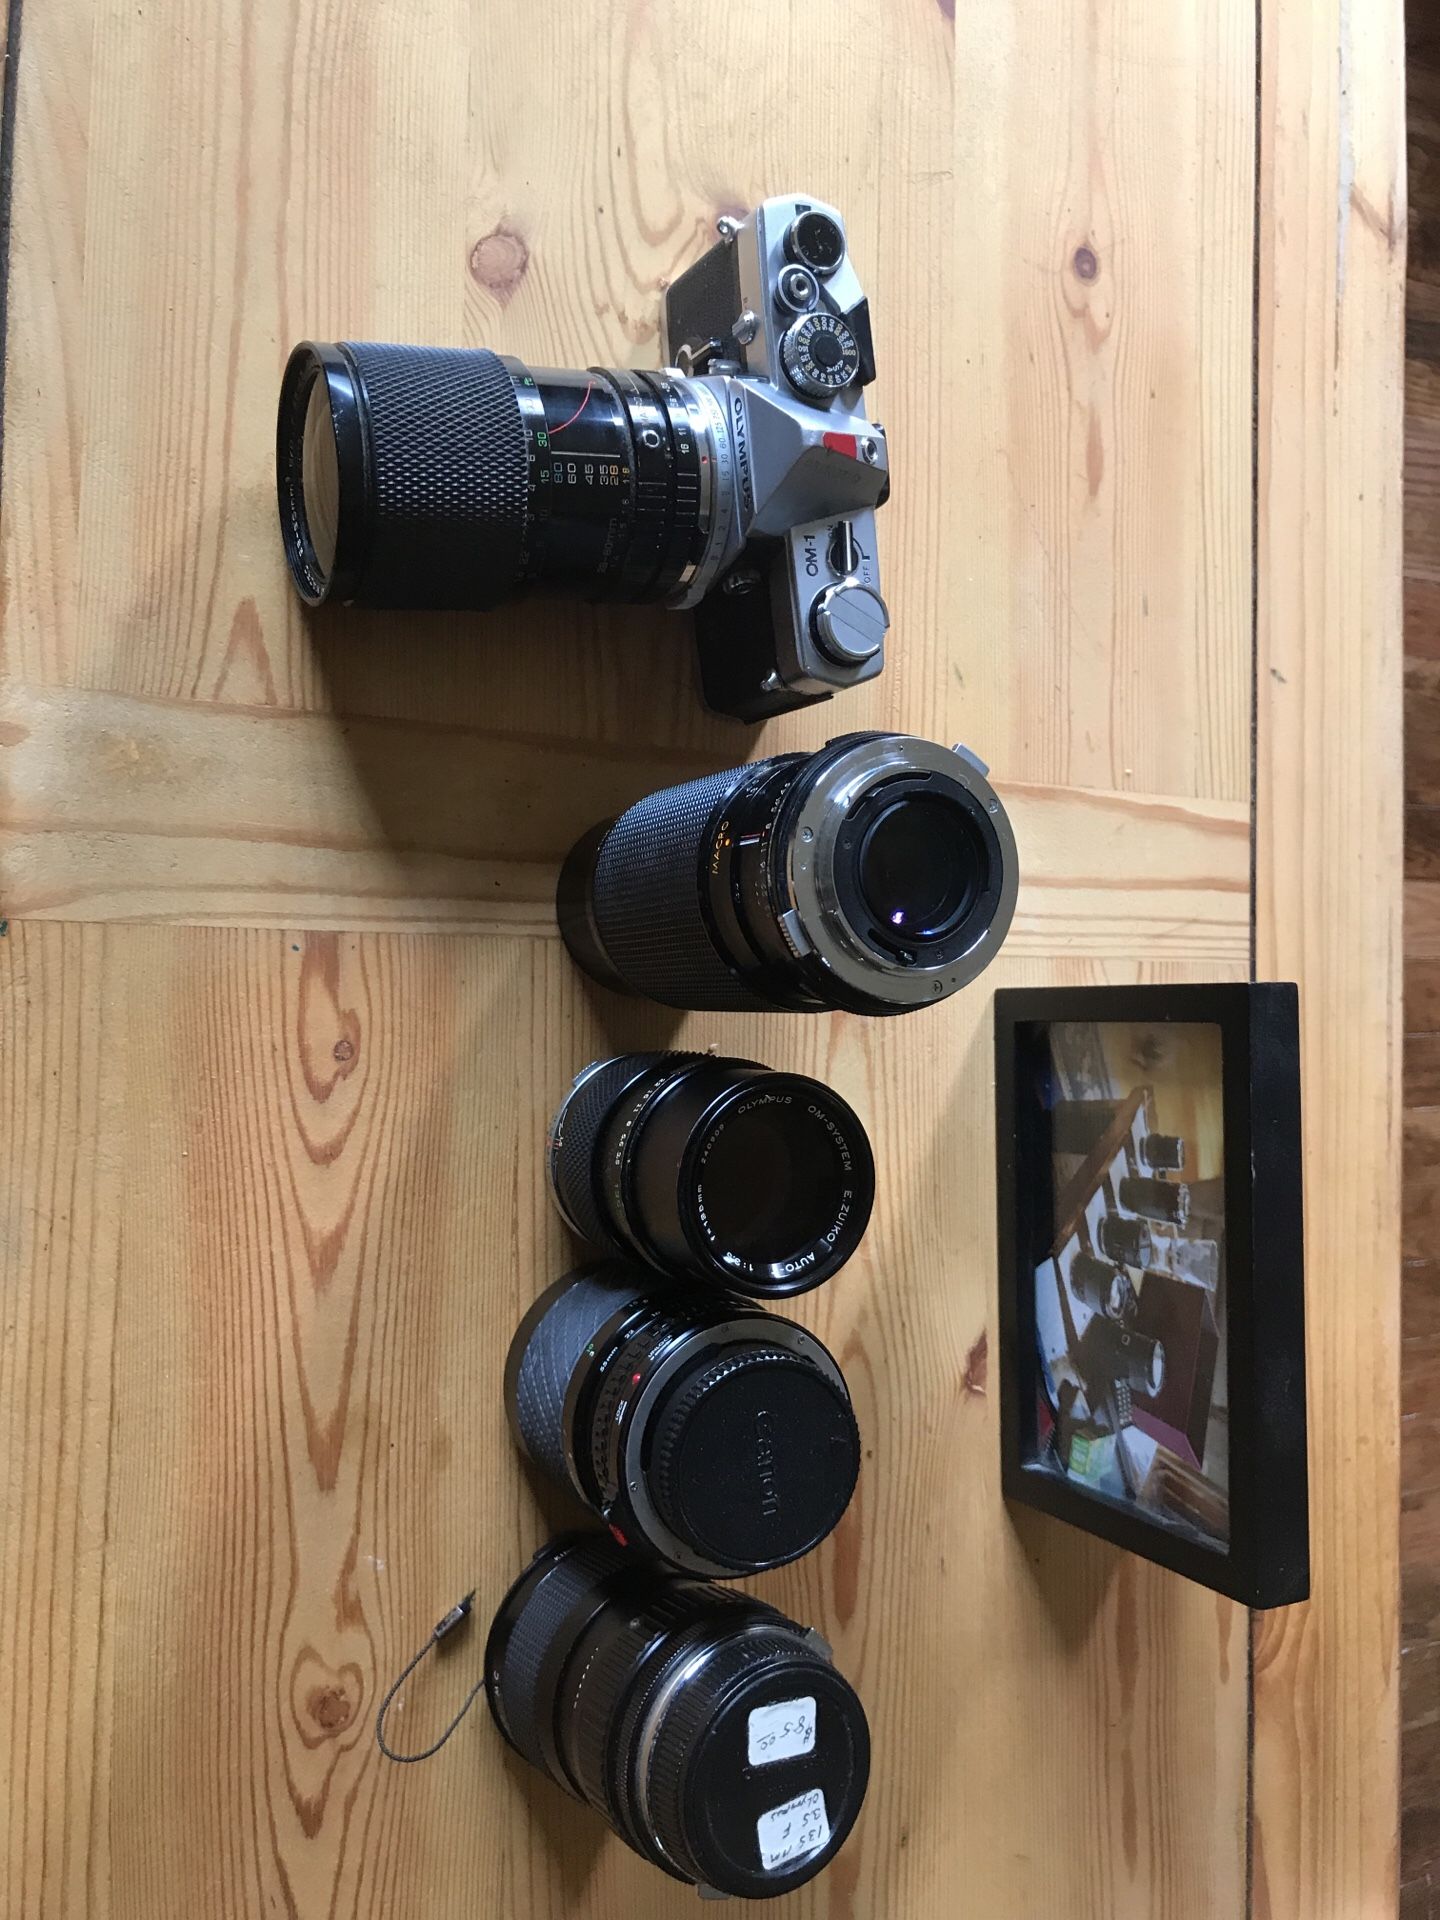 Canon camera Olympus camera and lenses